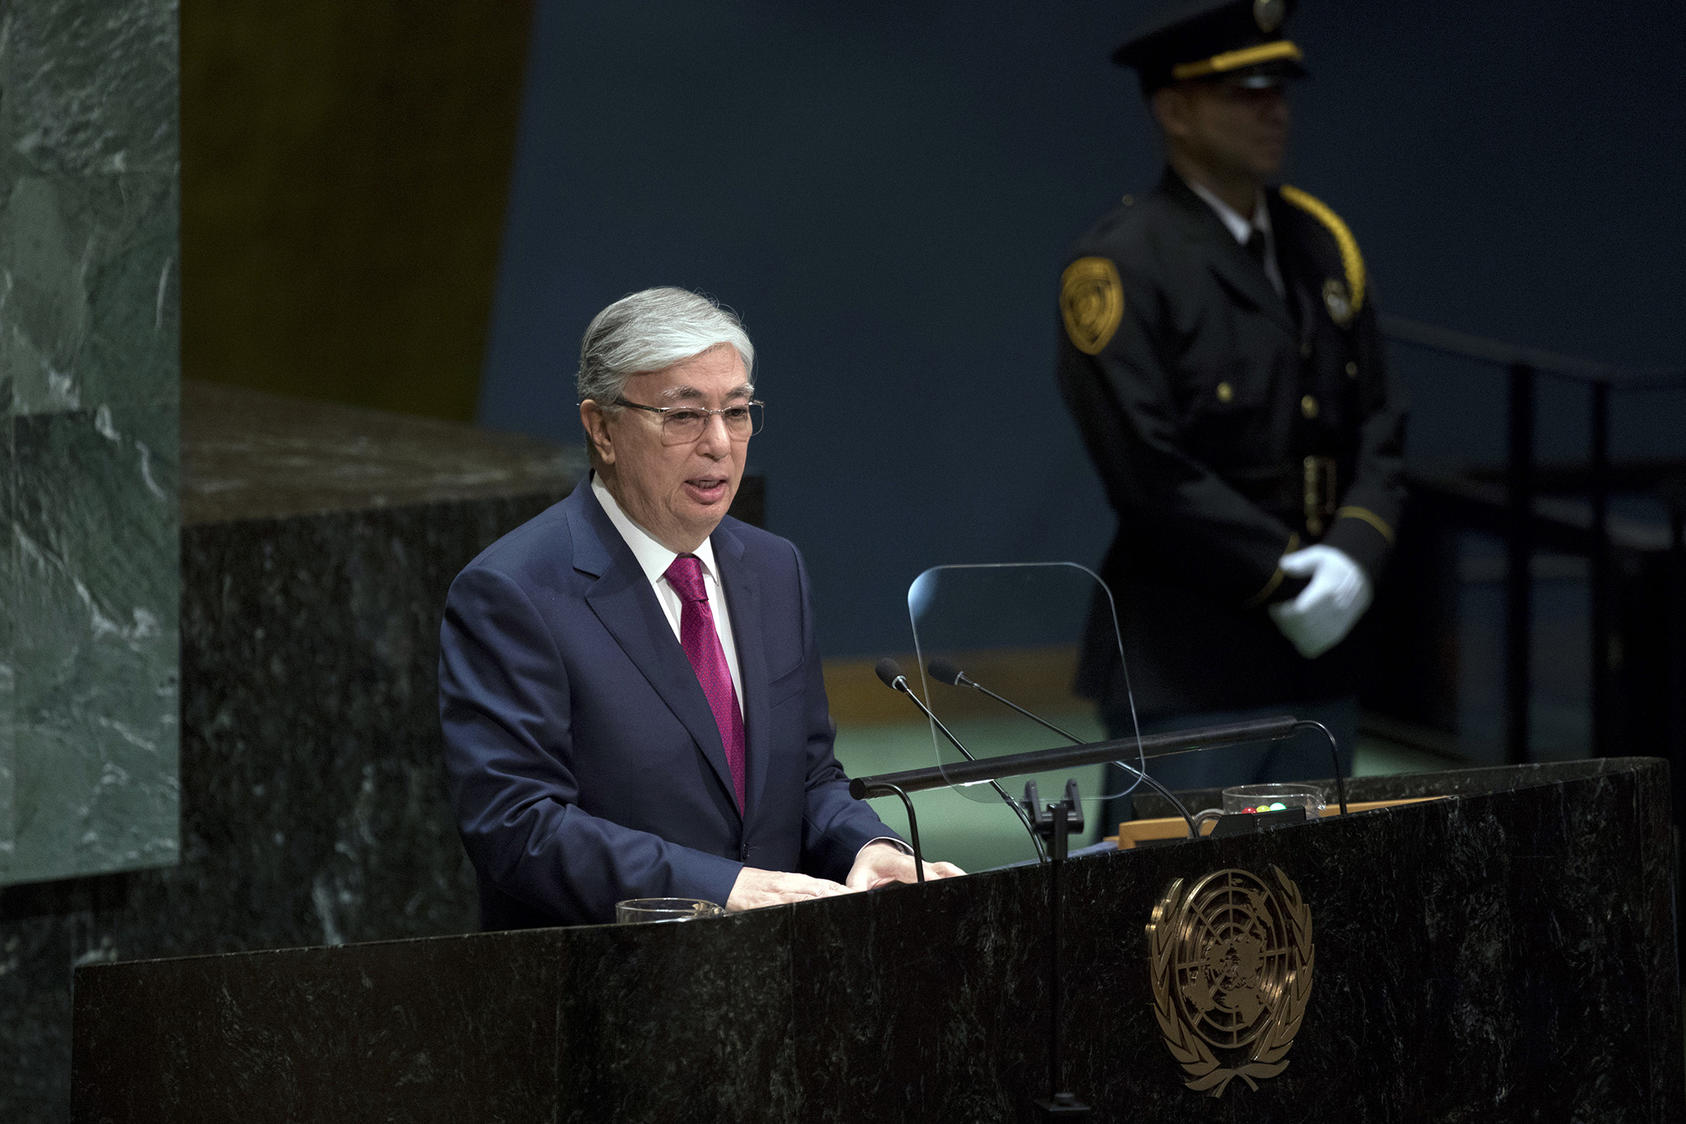 President Kassym-Jomart Tokayev of Kazakhstan, delivers remarks at the United Nations General Assembly at the United Nations headquarters in New York. September 24, 2019. (Dave Sanders/The New York Times)